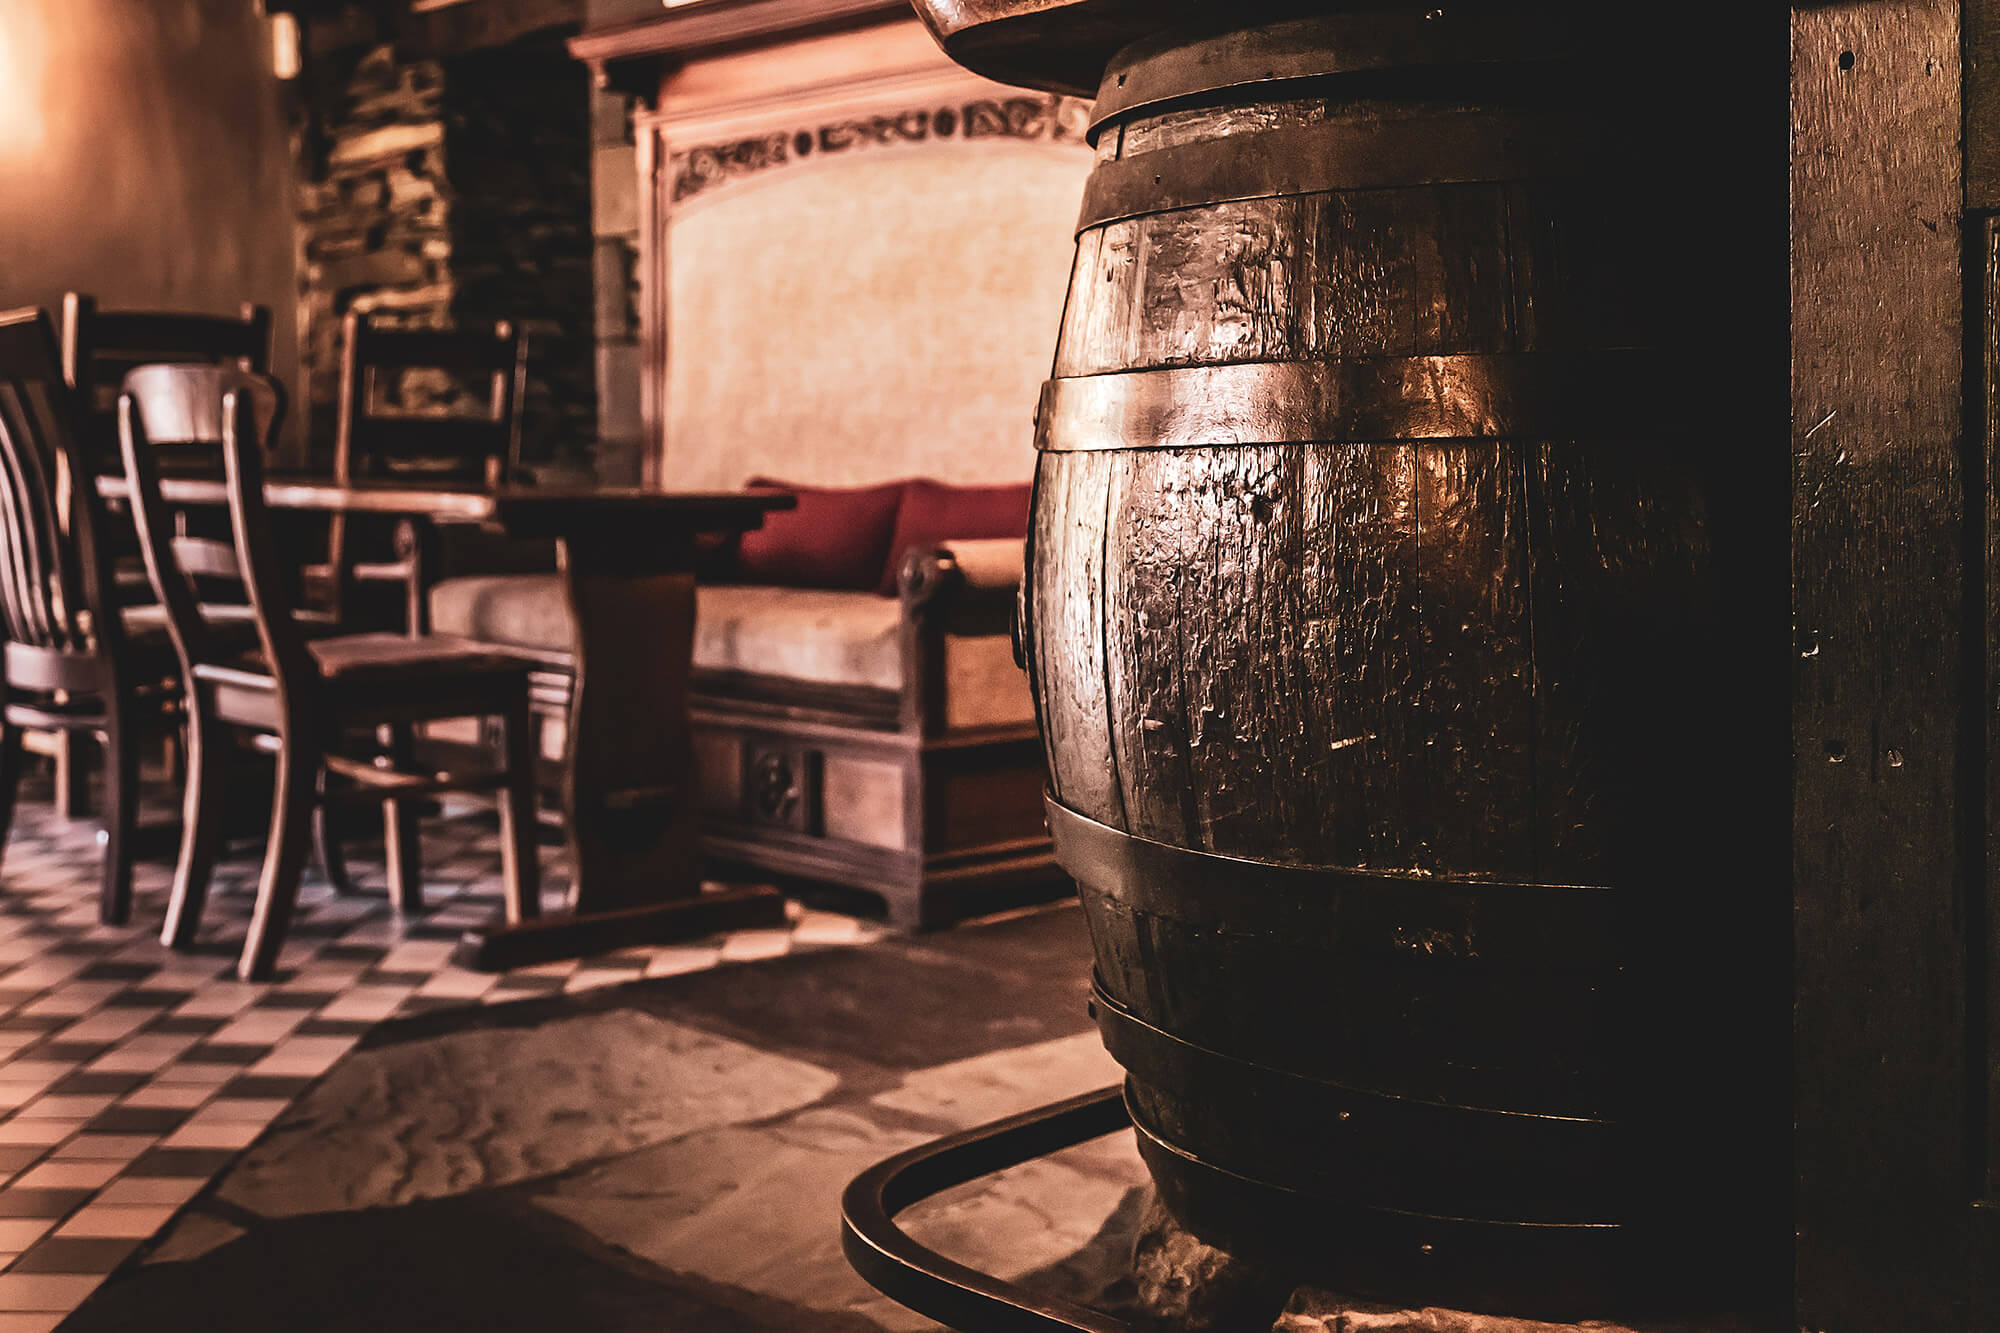 Wainwrights' Inn - Traditional Lakeland Pub